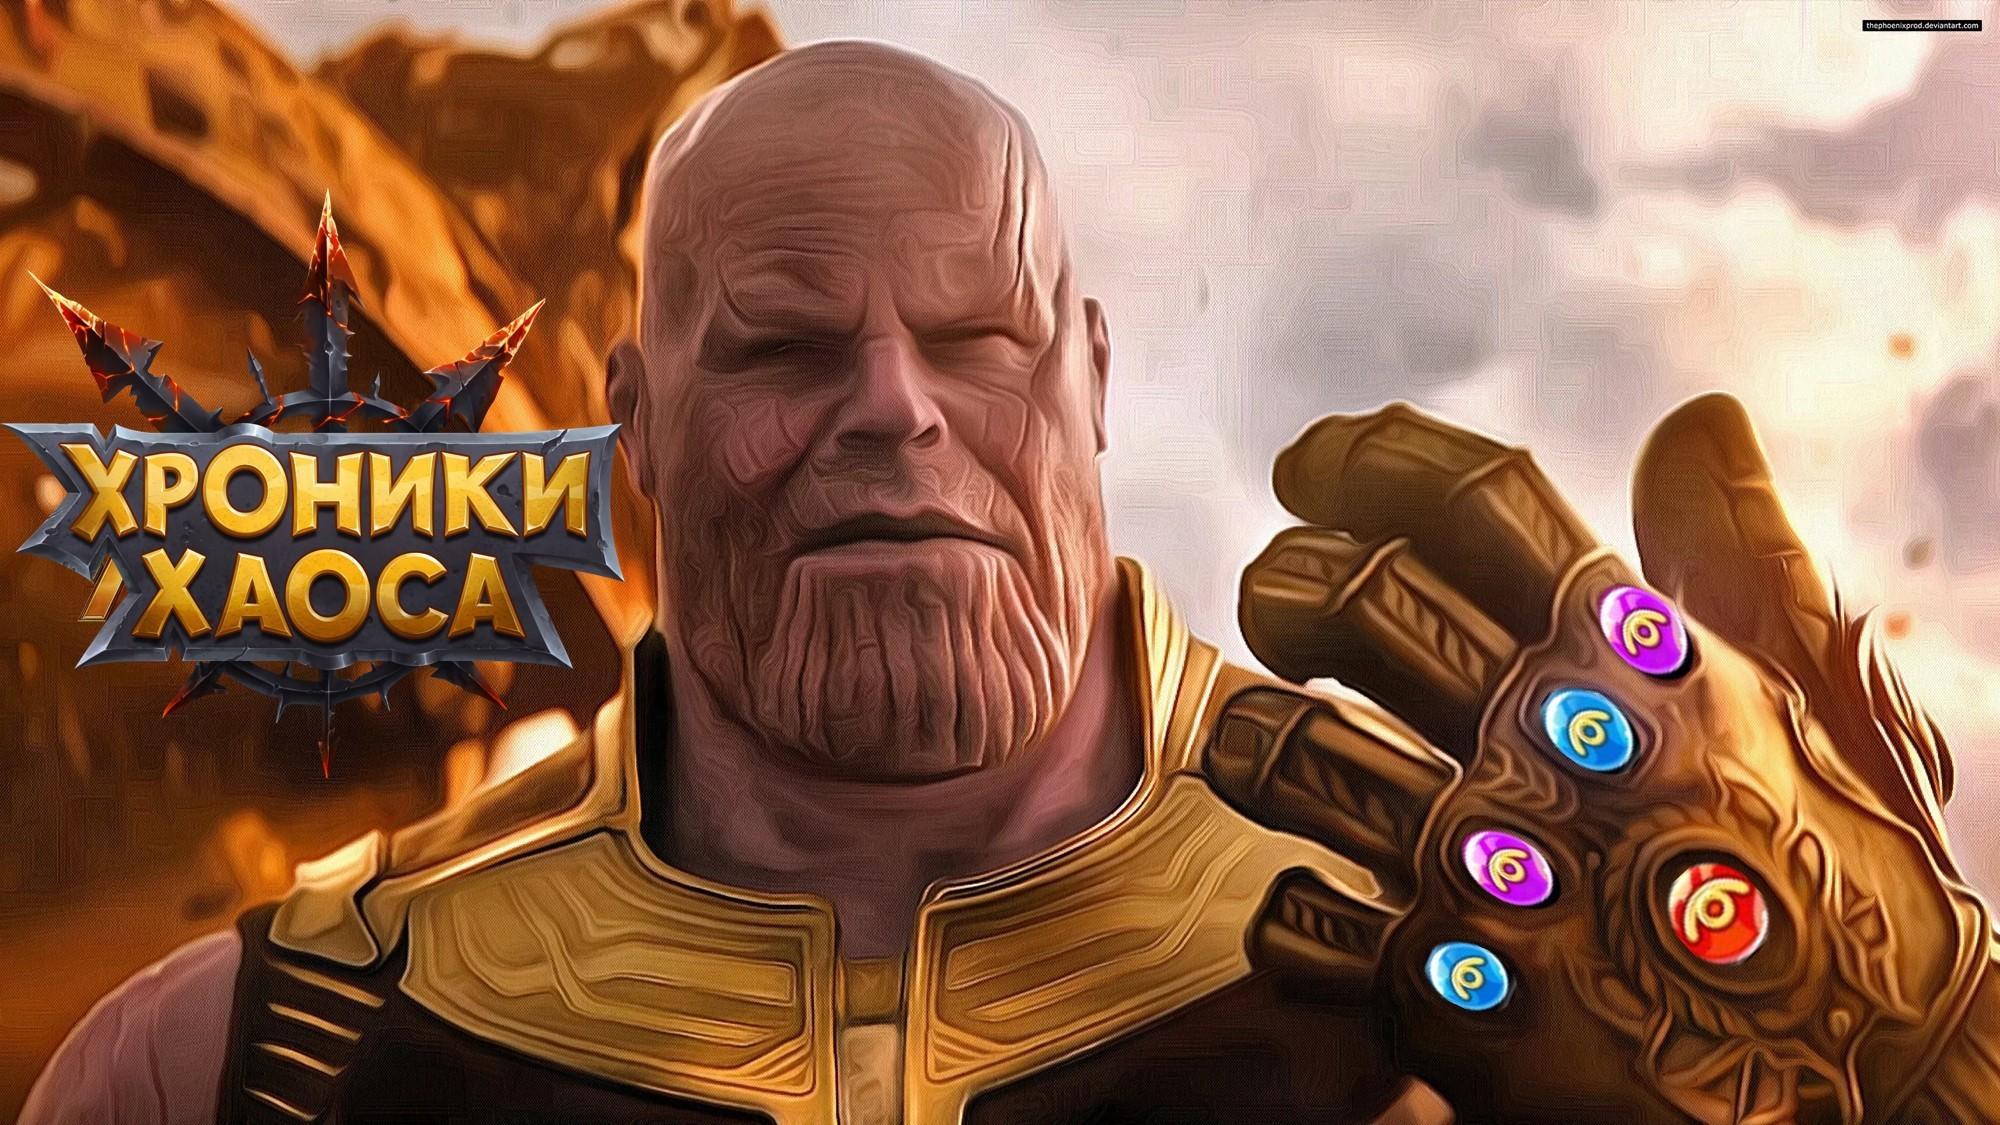 Create meme infinity, Thanos Wallpaper, the Avengers